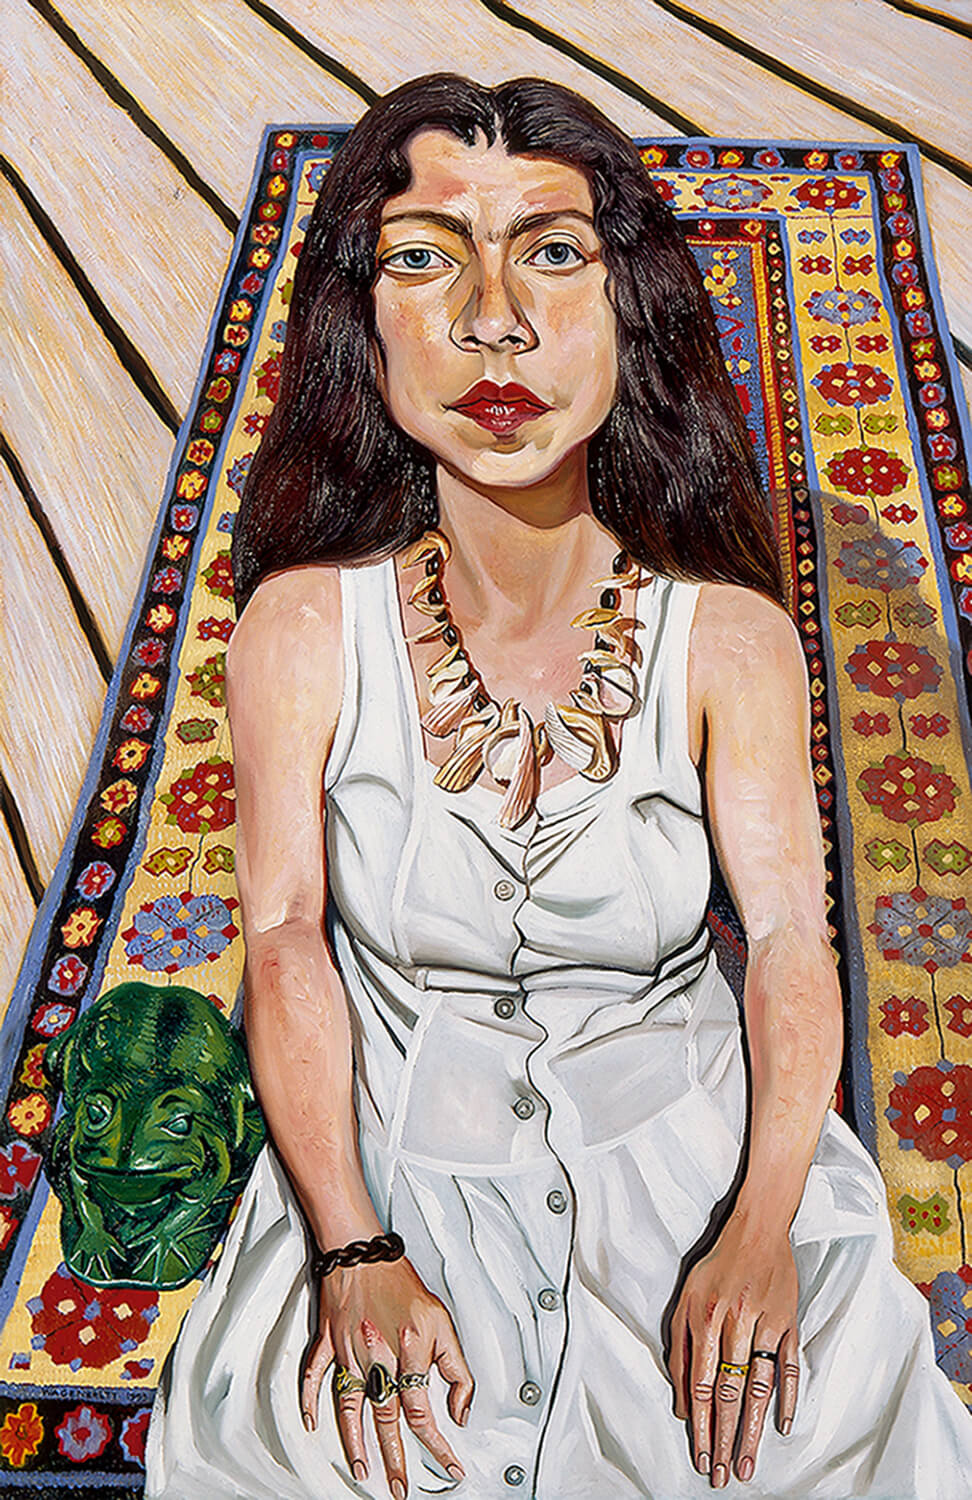 Norbert Wagenbrett, Woman in White Dress, 1993, oil on canvas, 140 x 90 cm